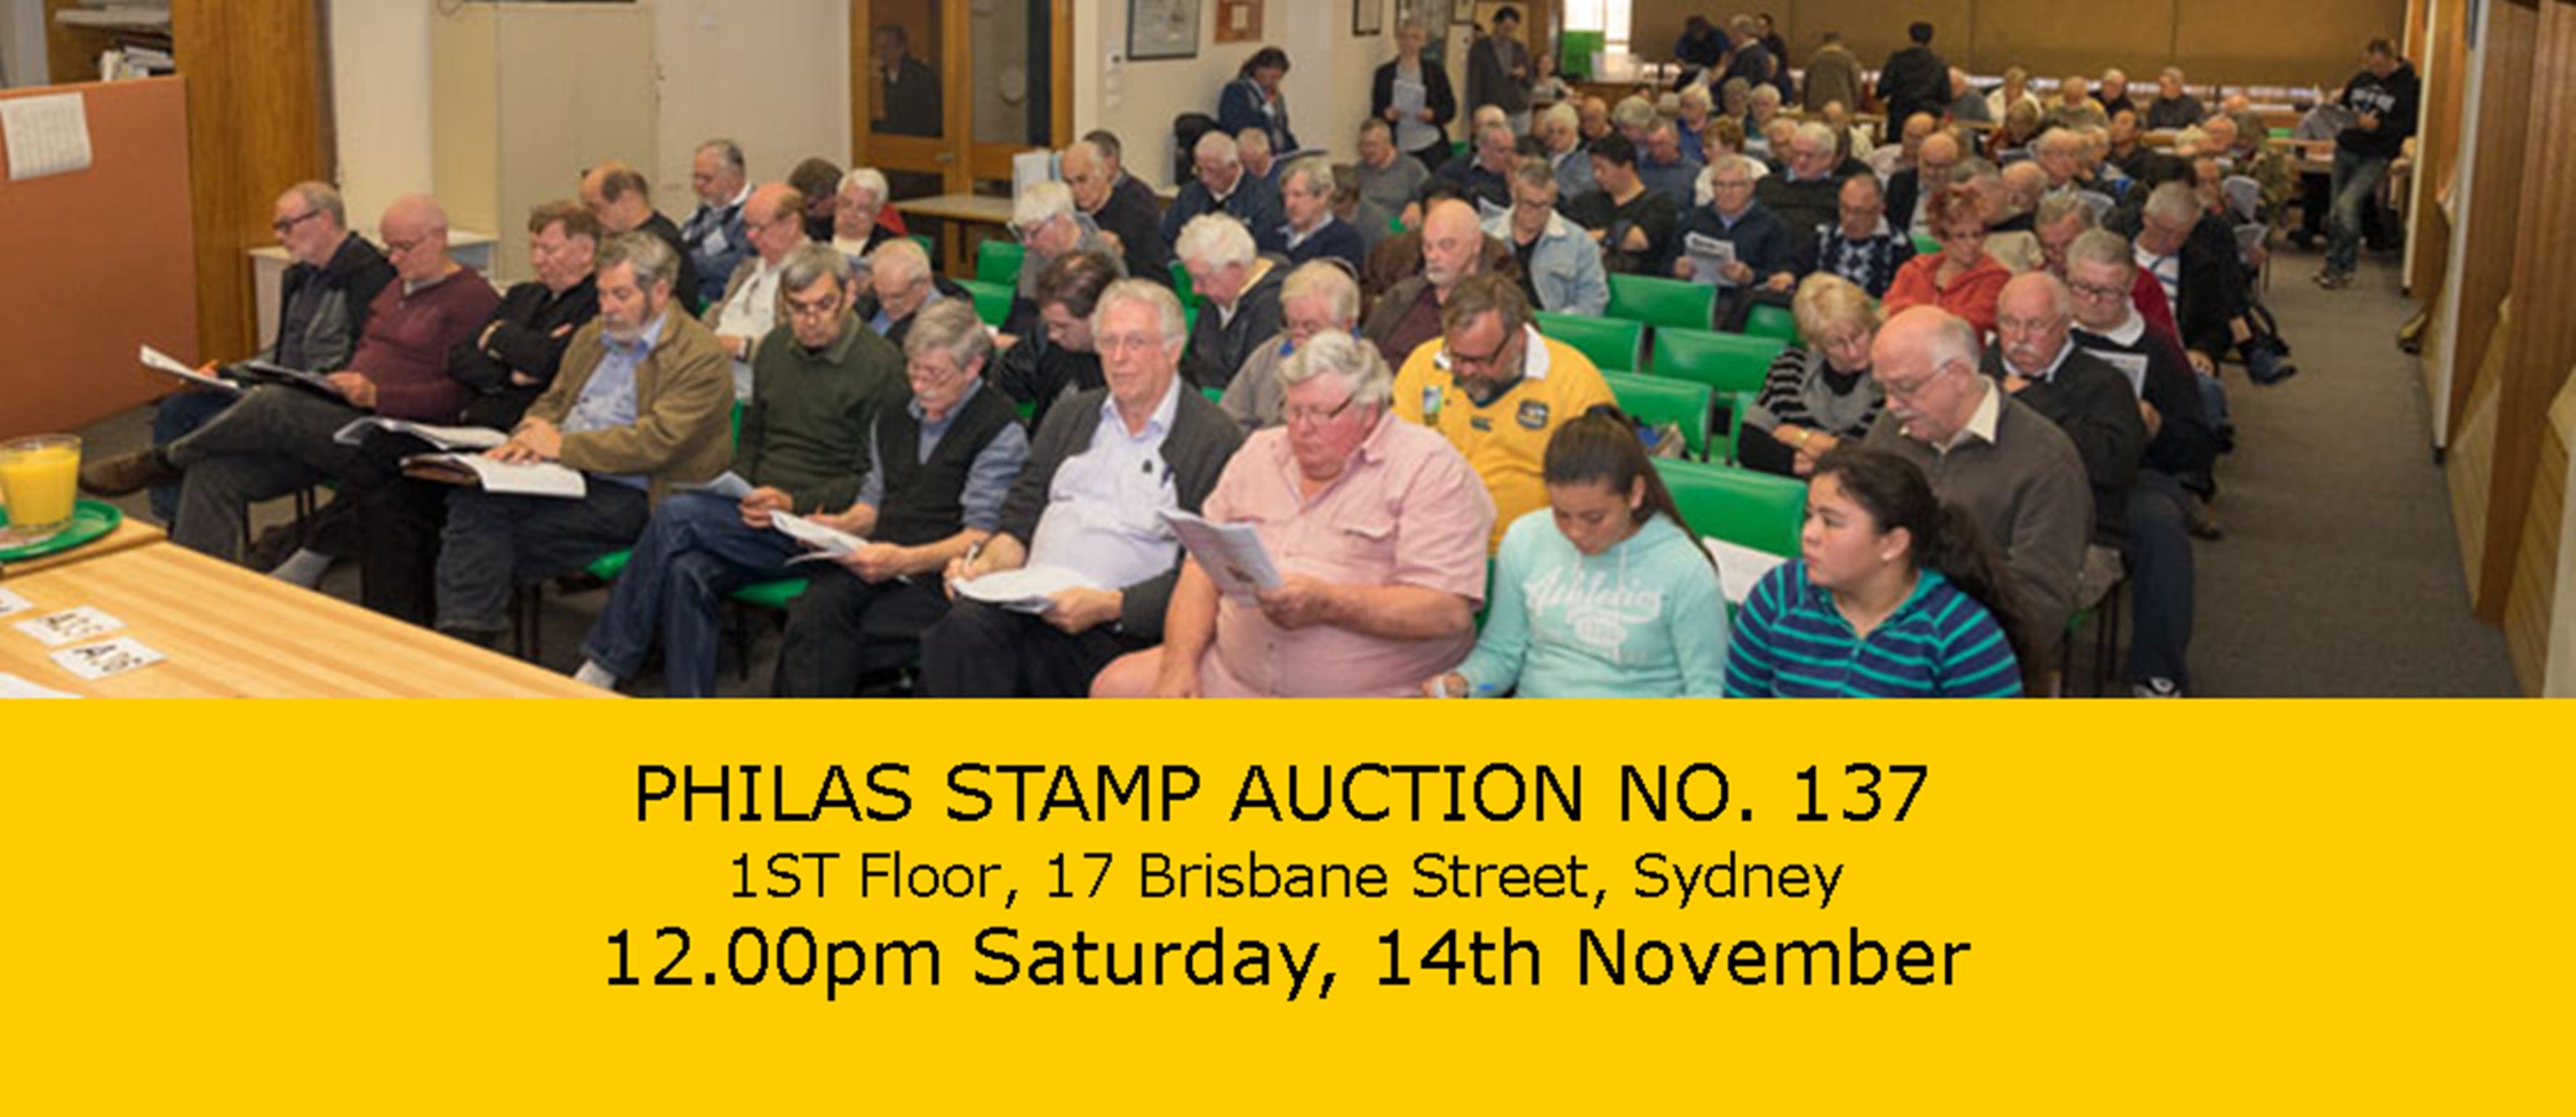 PHILAS Stamp Auction No. 137 - Townsville Tourism